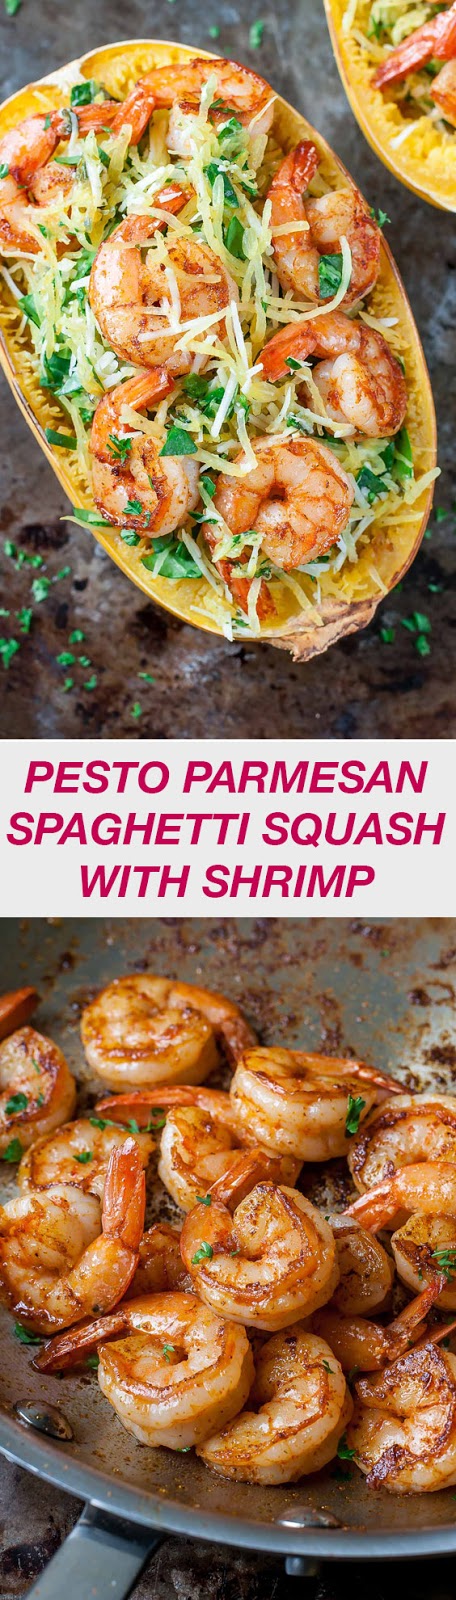 Parmesan Pesto Spaghetti Squash with Shrimp